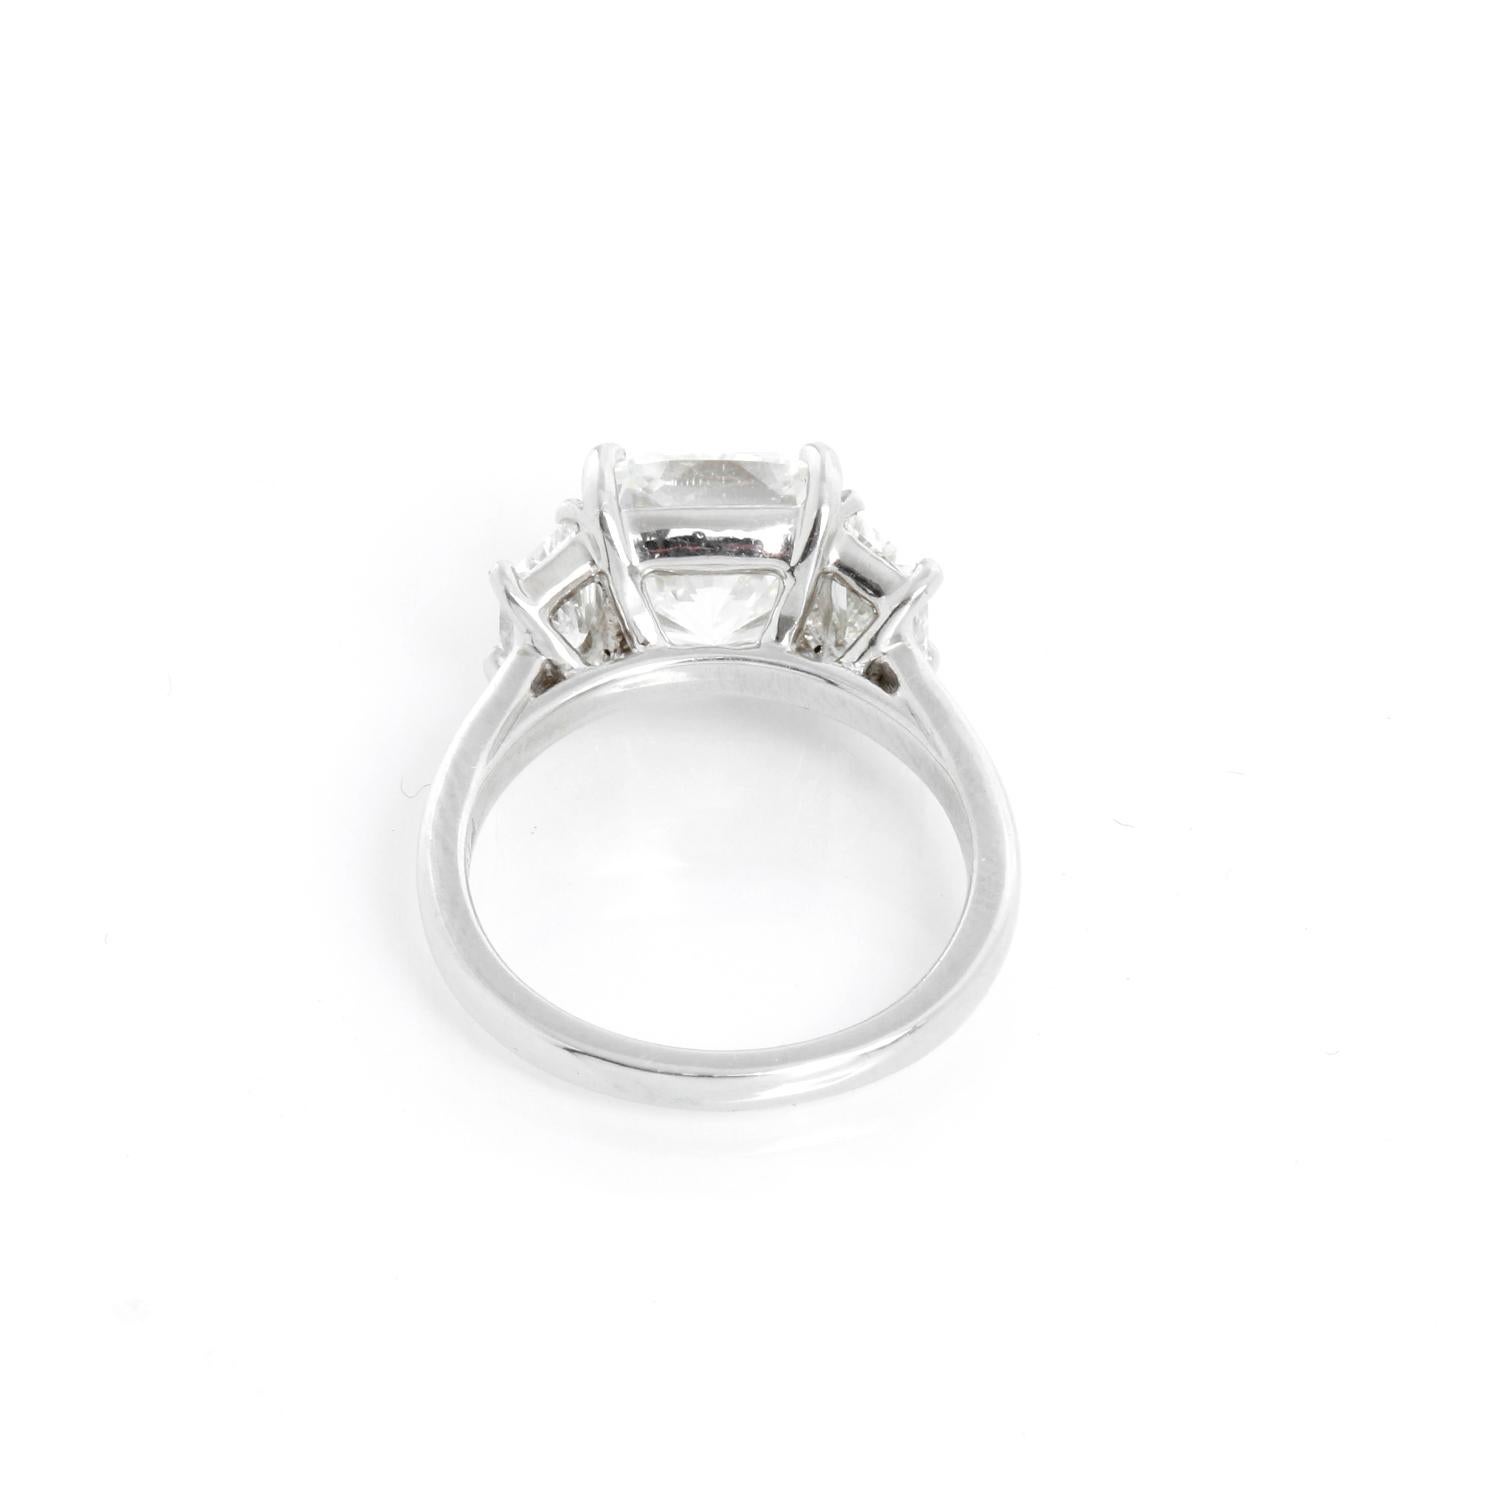 3.24 Carat Cushion Cut Diamond Engagement Ring Size 4.5 For Sale 3